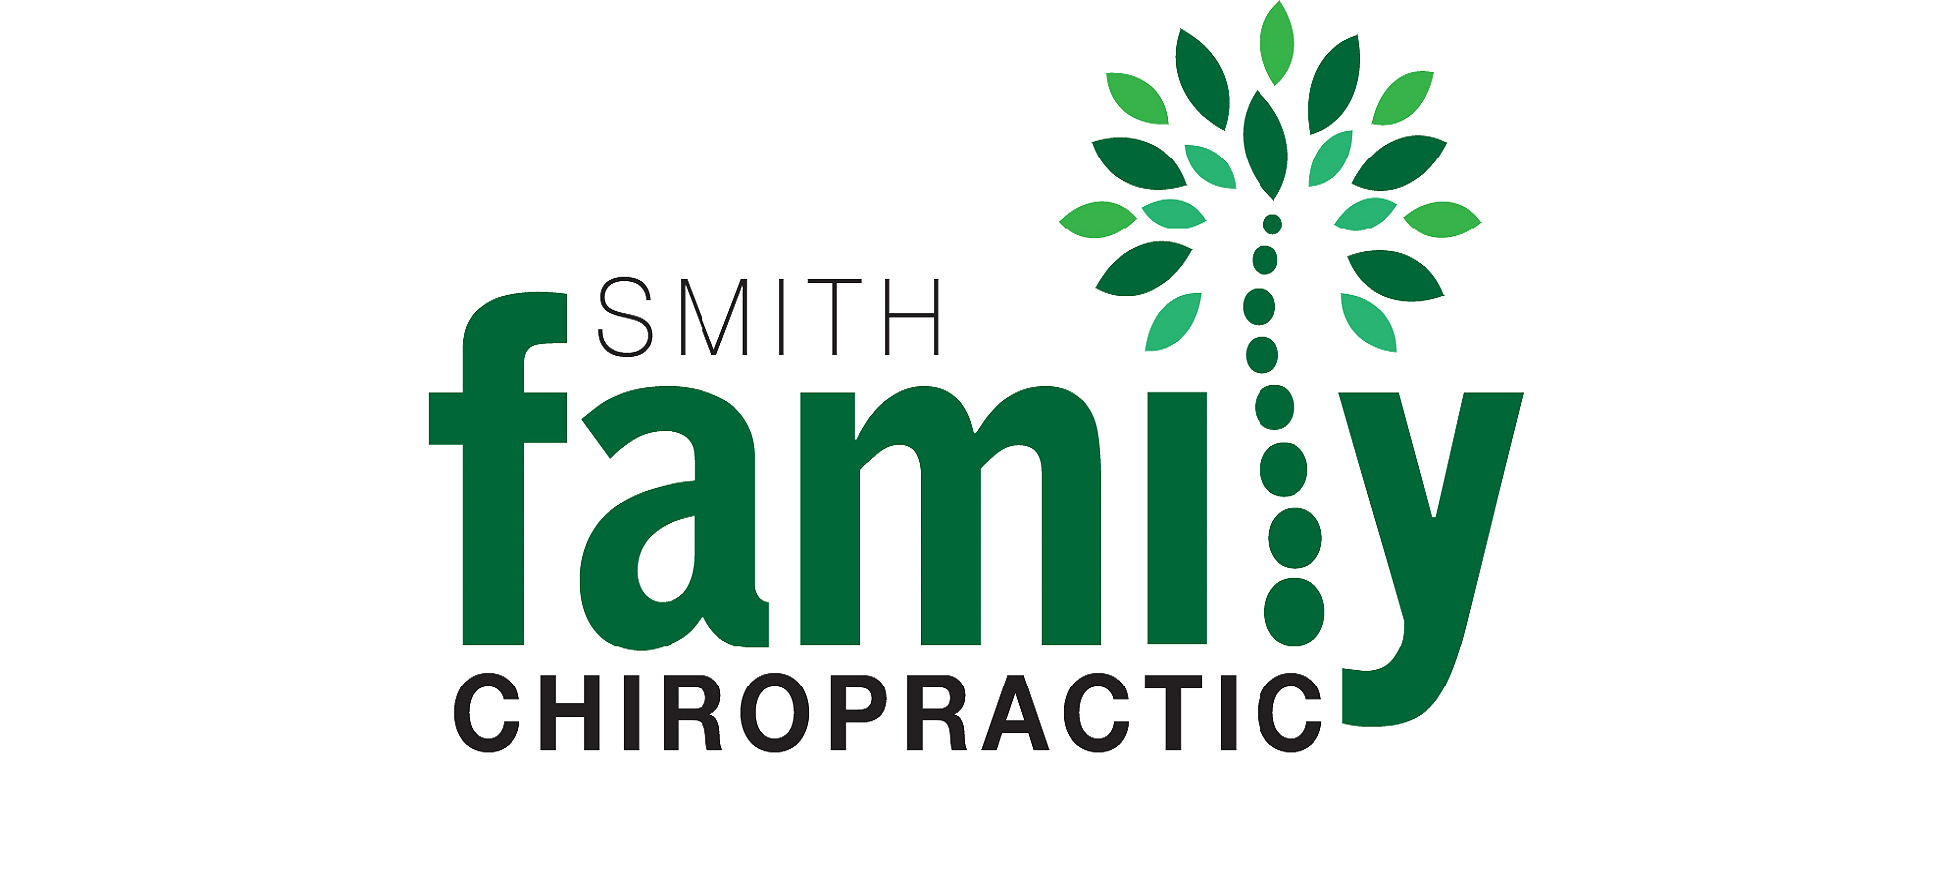 Smith Chiropractic Logoc